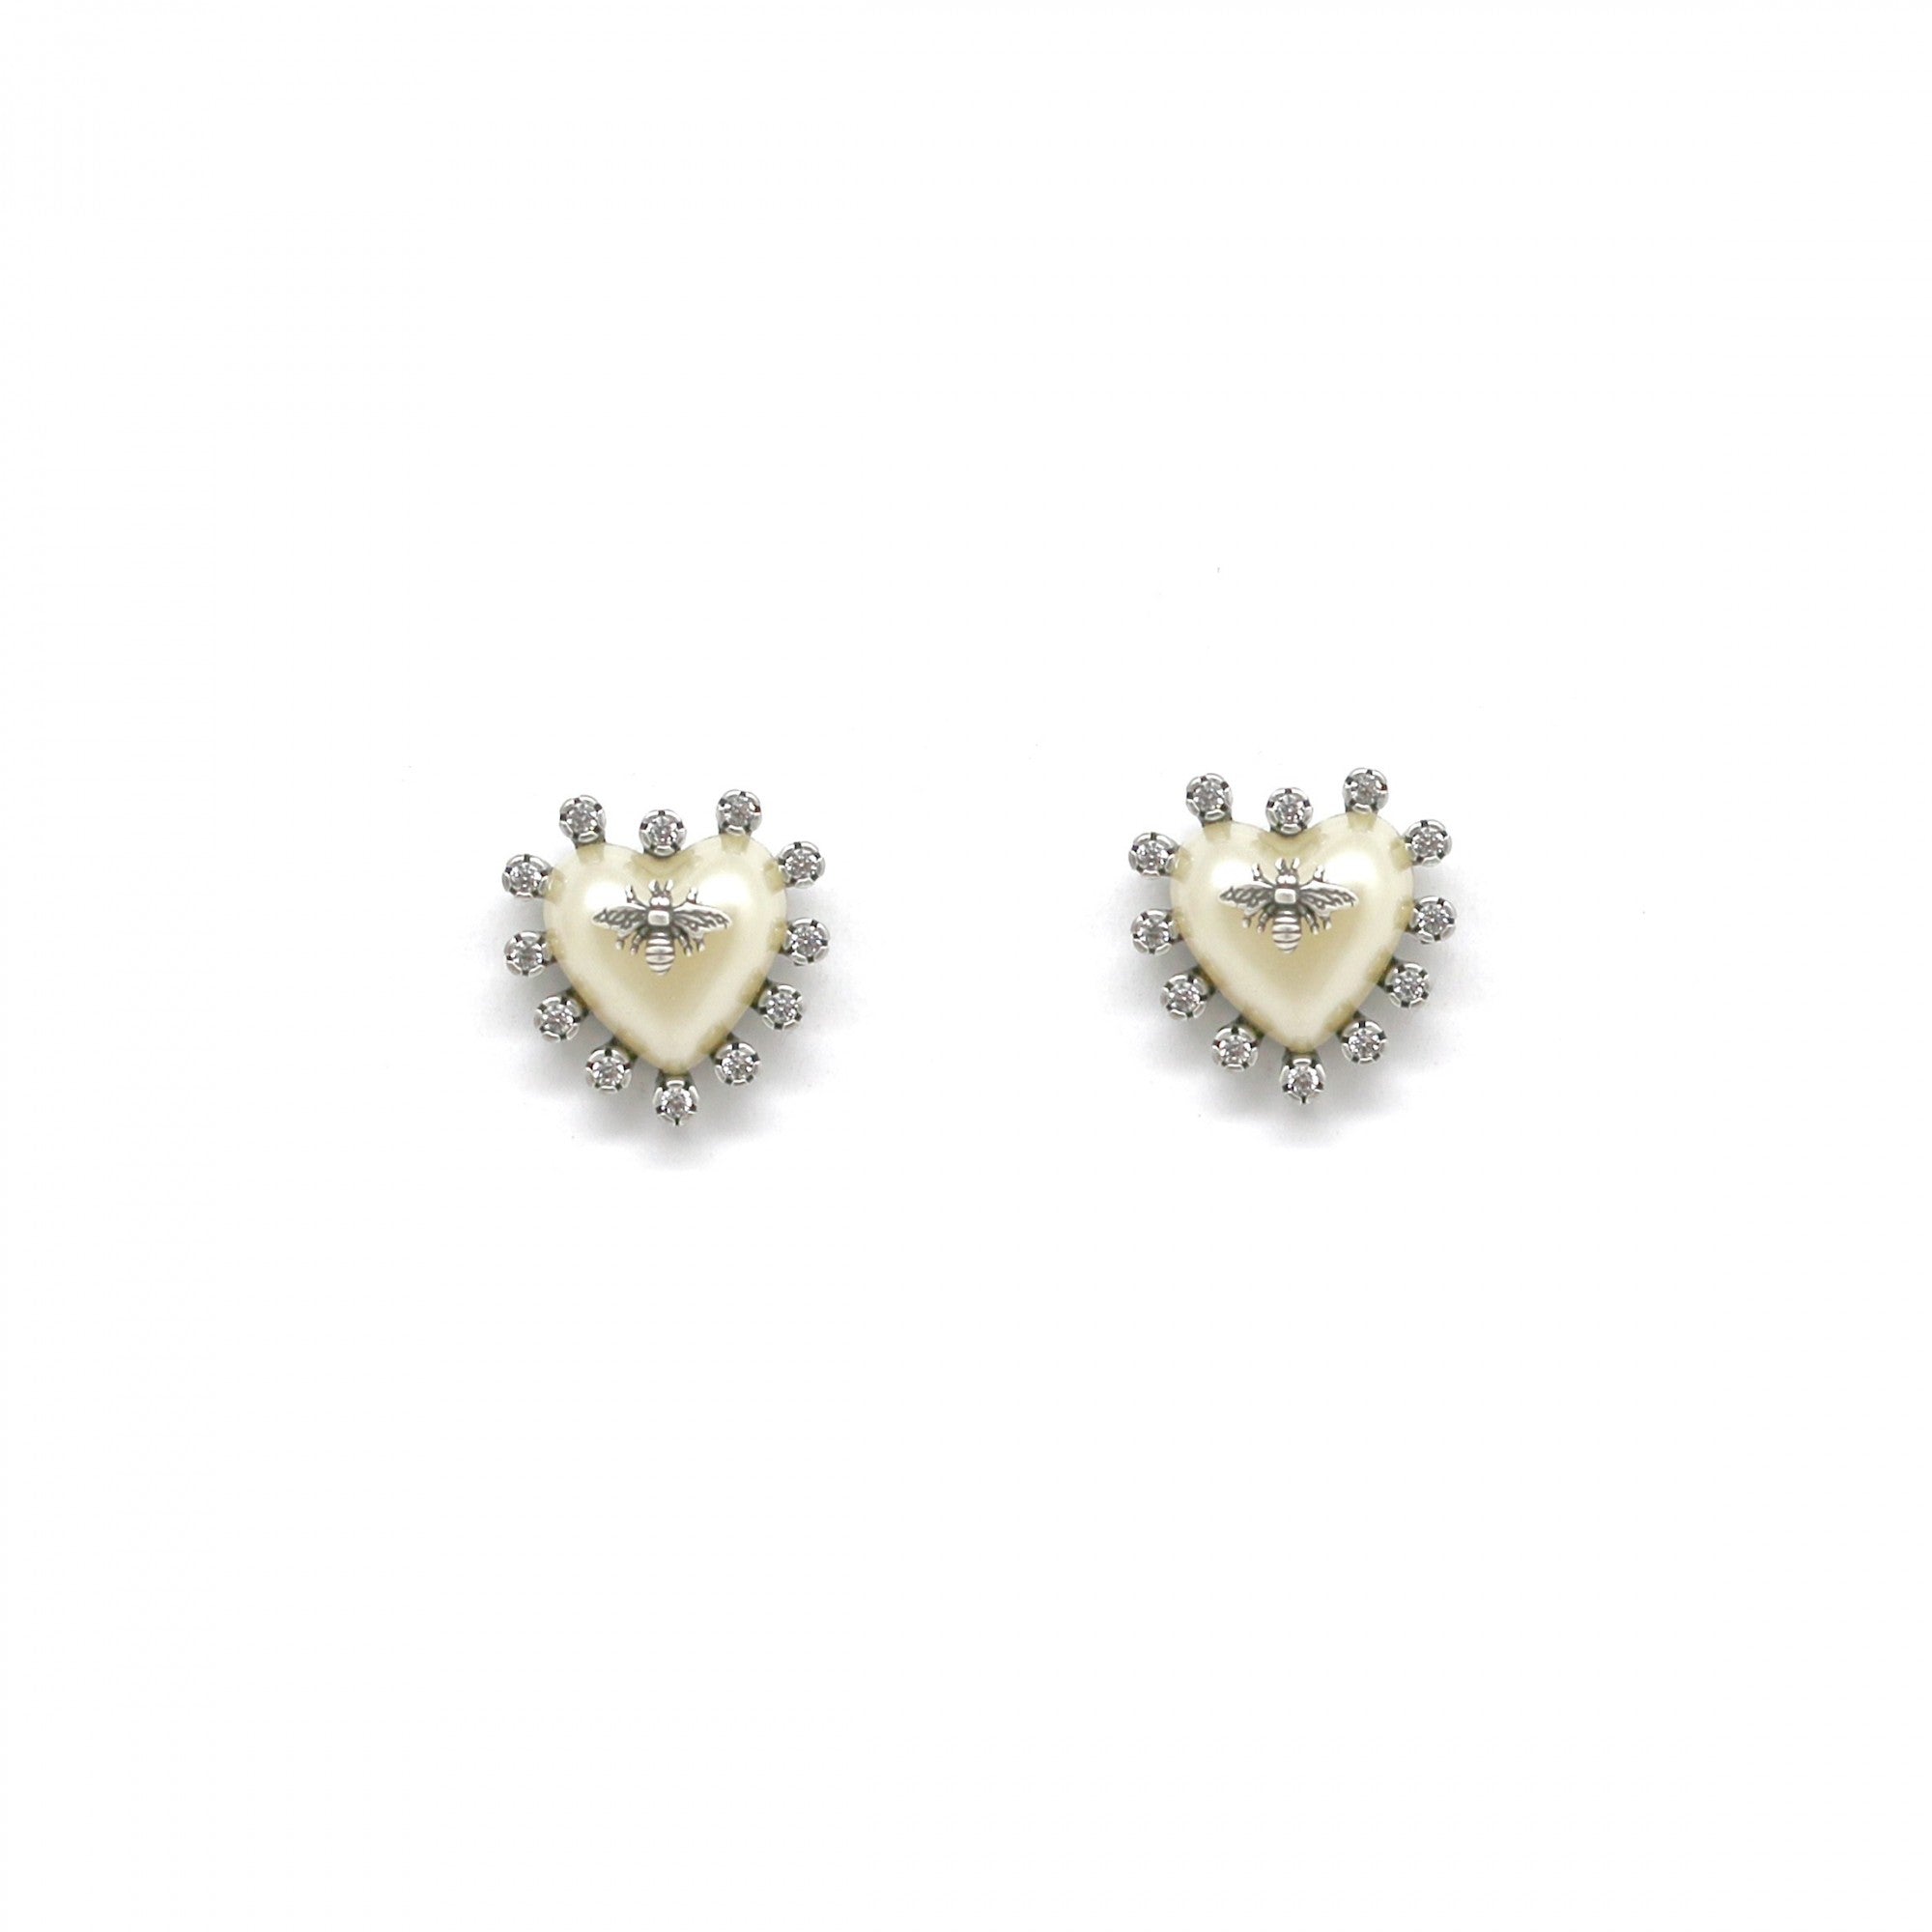 Heart earrings with bee